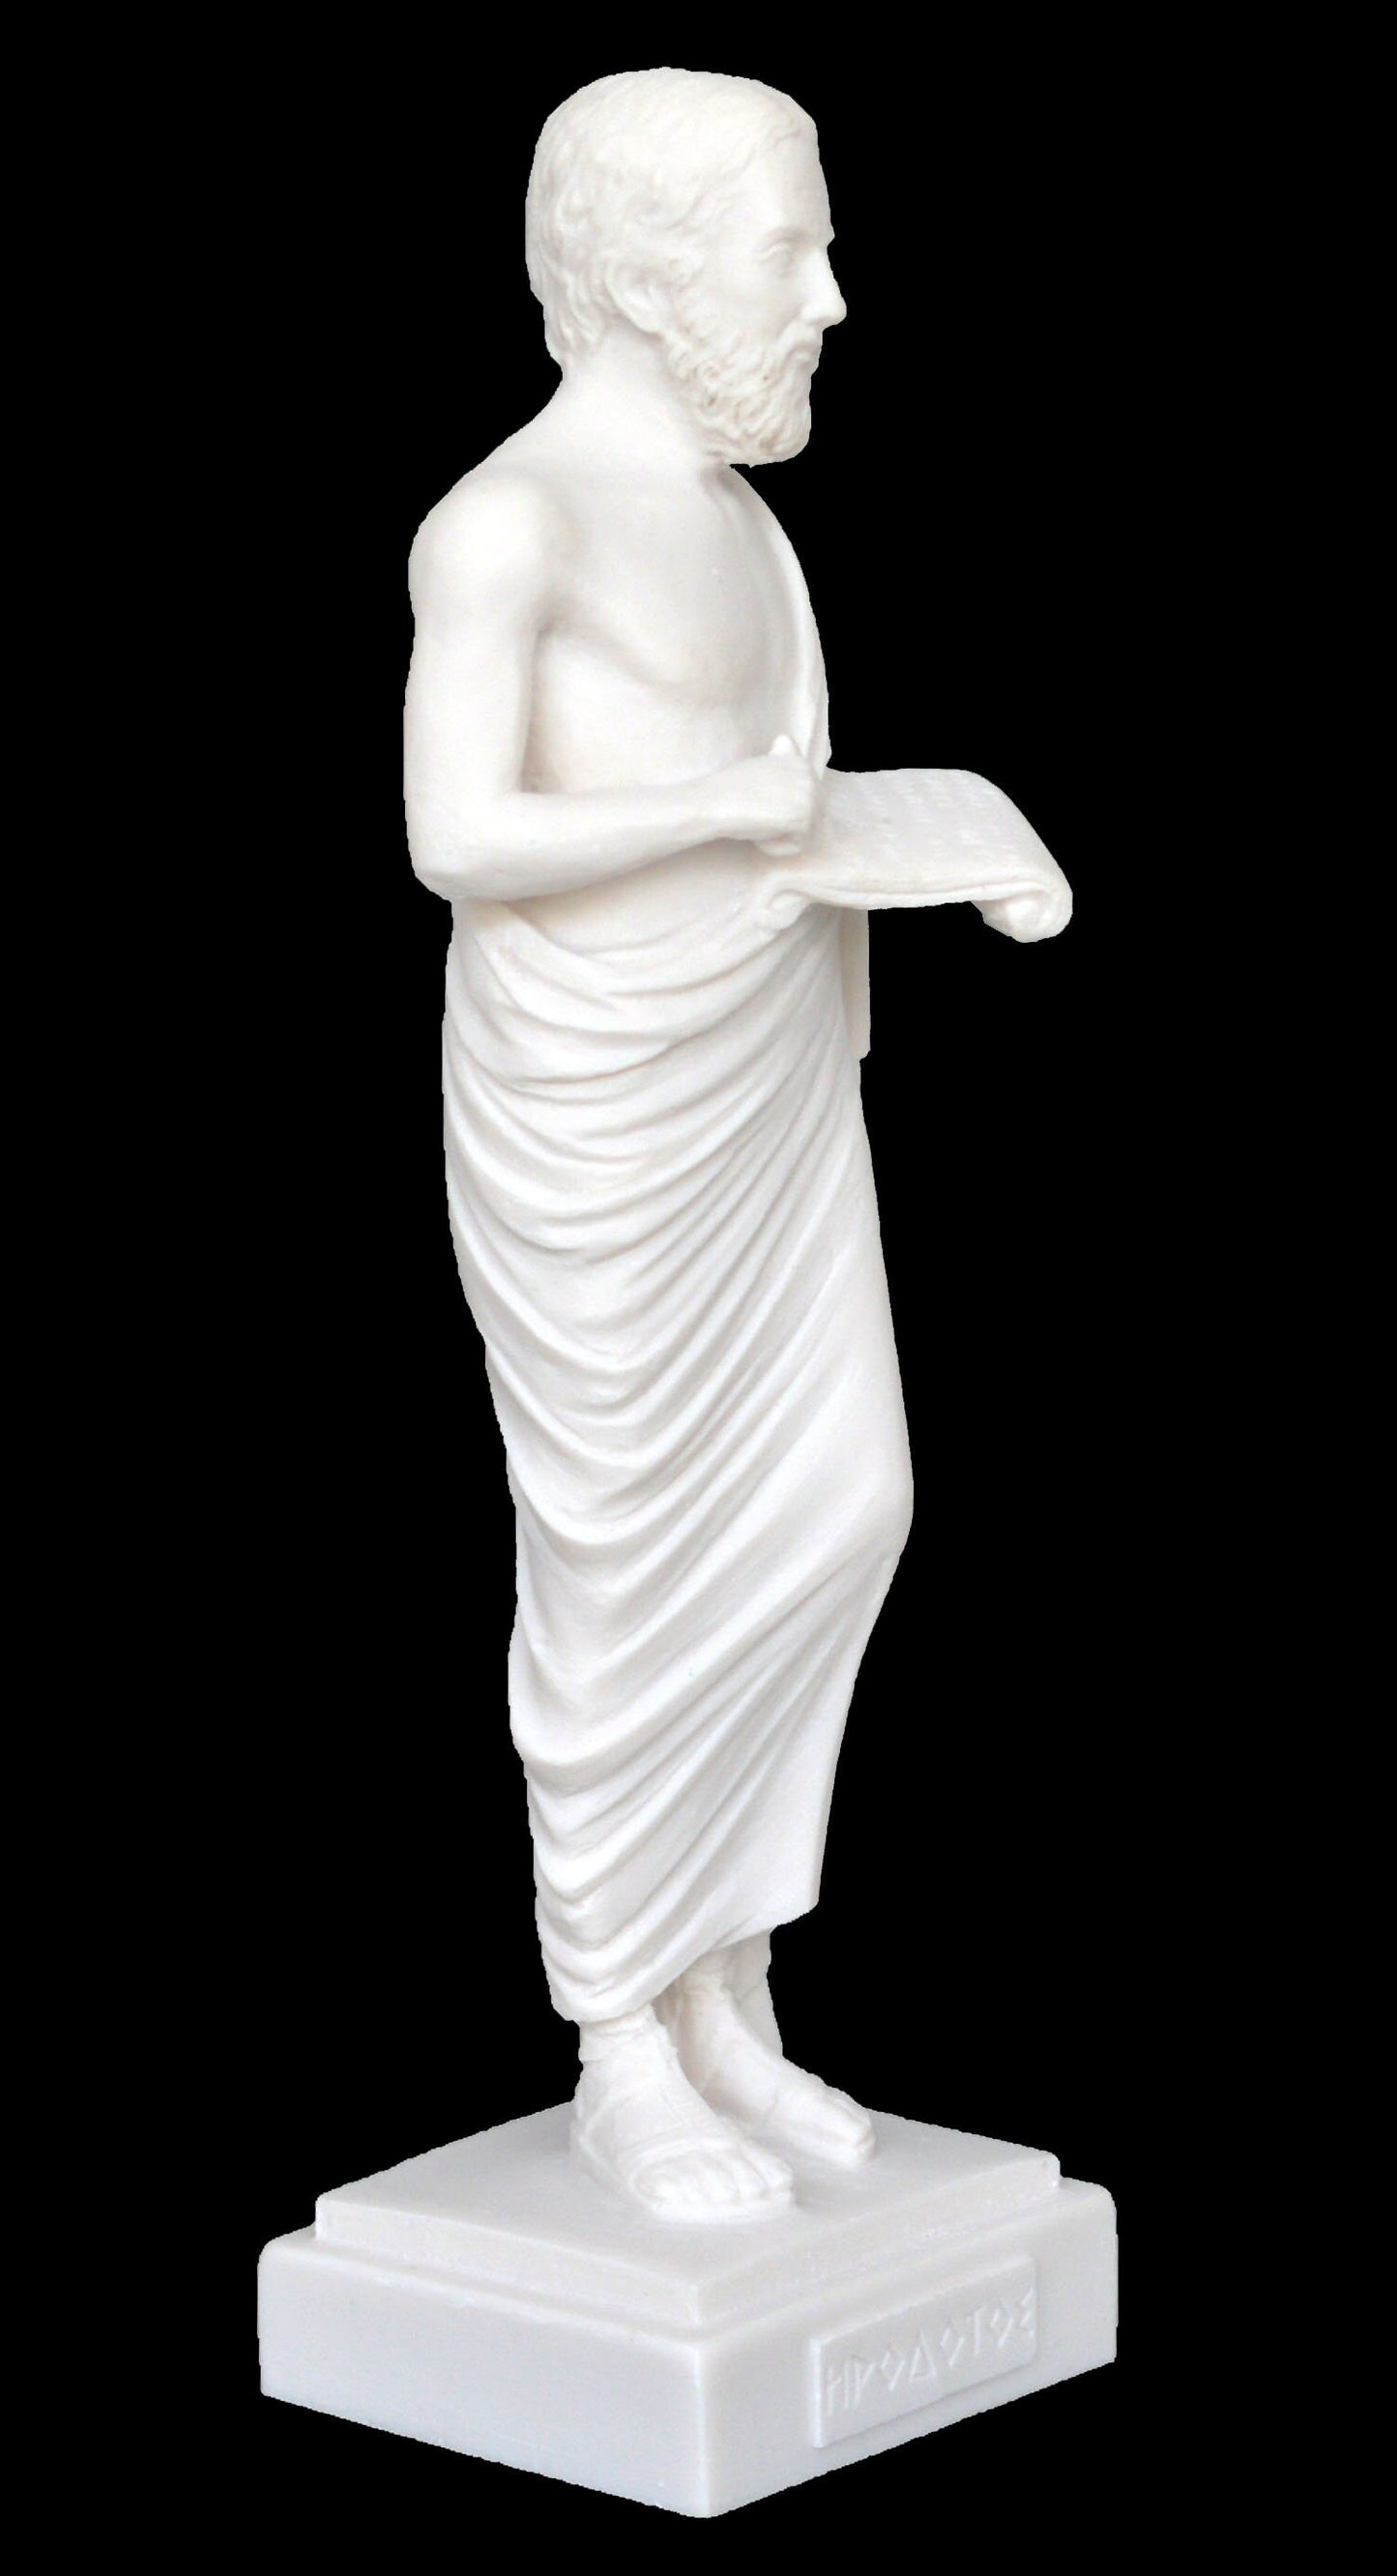 Herodotus - Ancient Greek Historian, Father of History - Halicarnassus, 484–425 BC - Alabaster Statue Sculpture